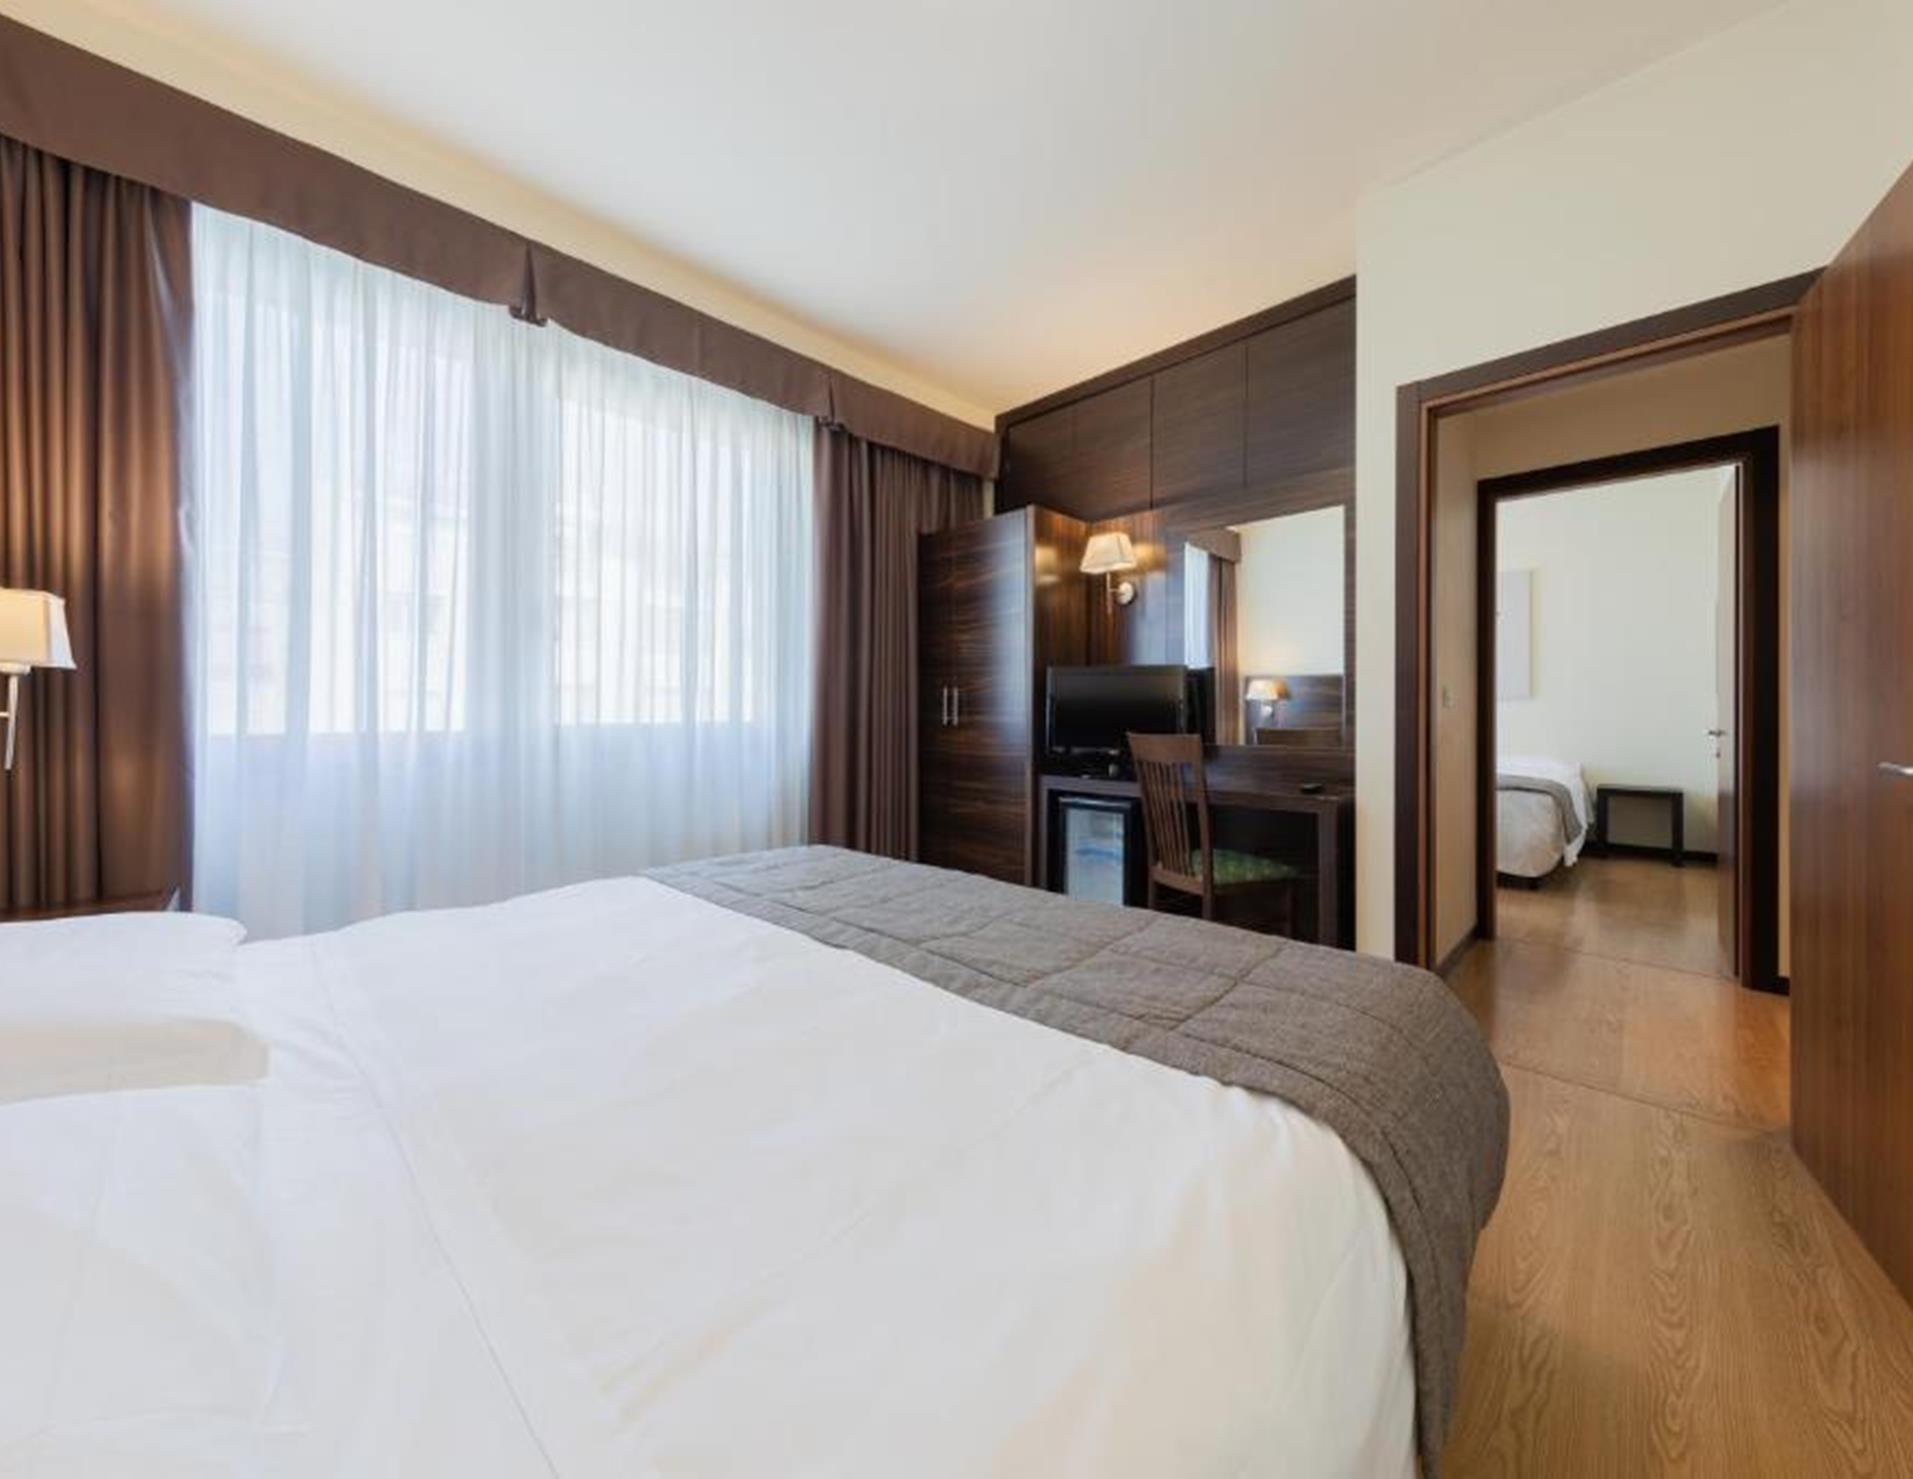 Quality Hotel Delfino - Room 12